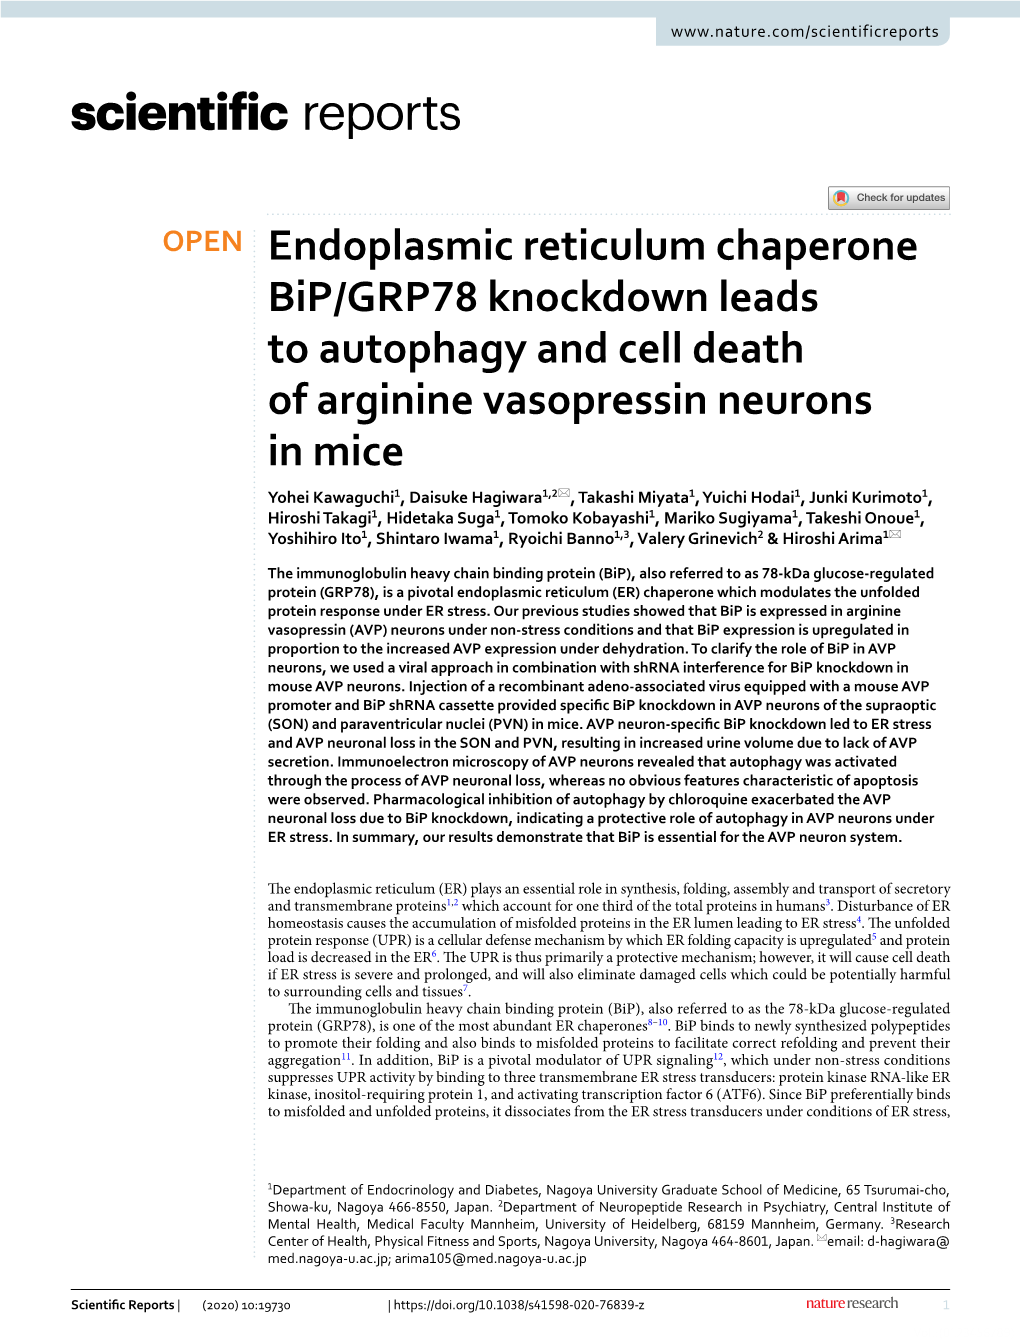 Endoplasmic Reticulum Chaperone Bip/GRP78 Knockdown Leads To